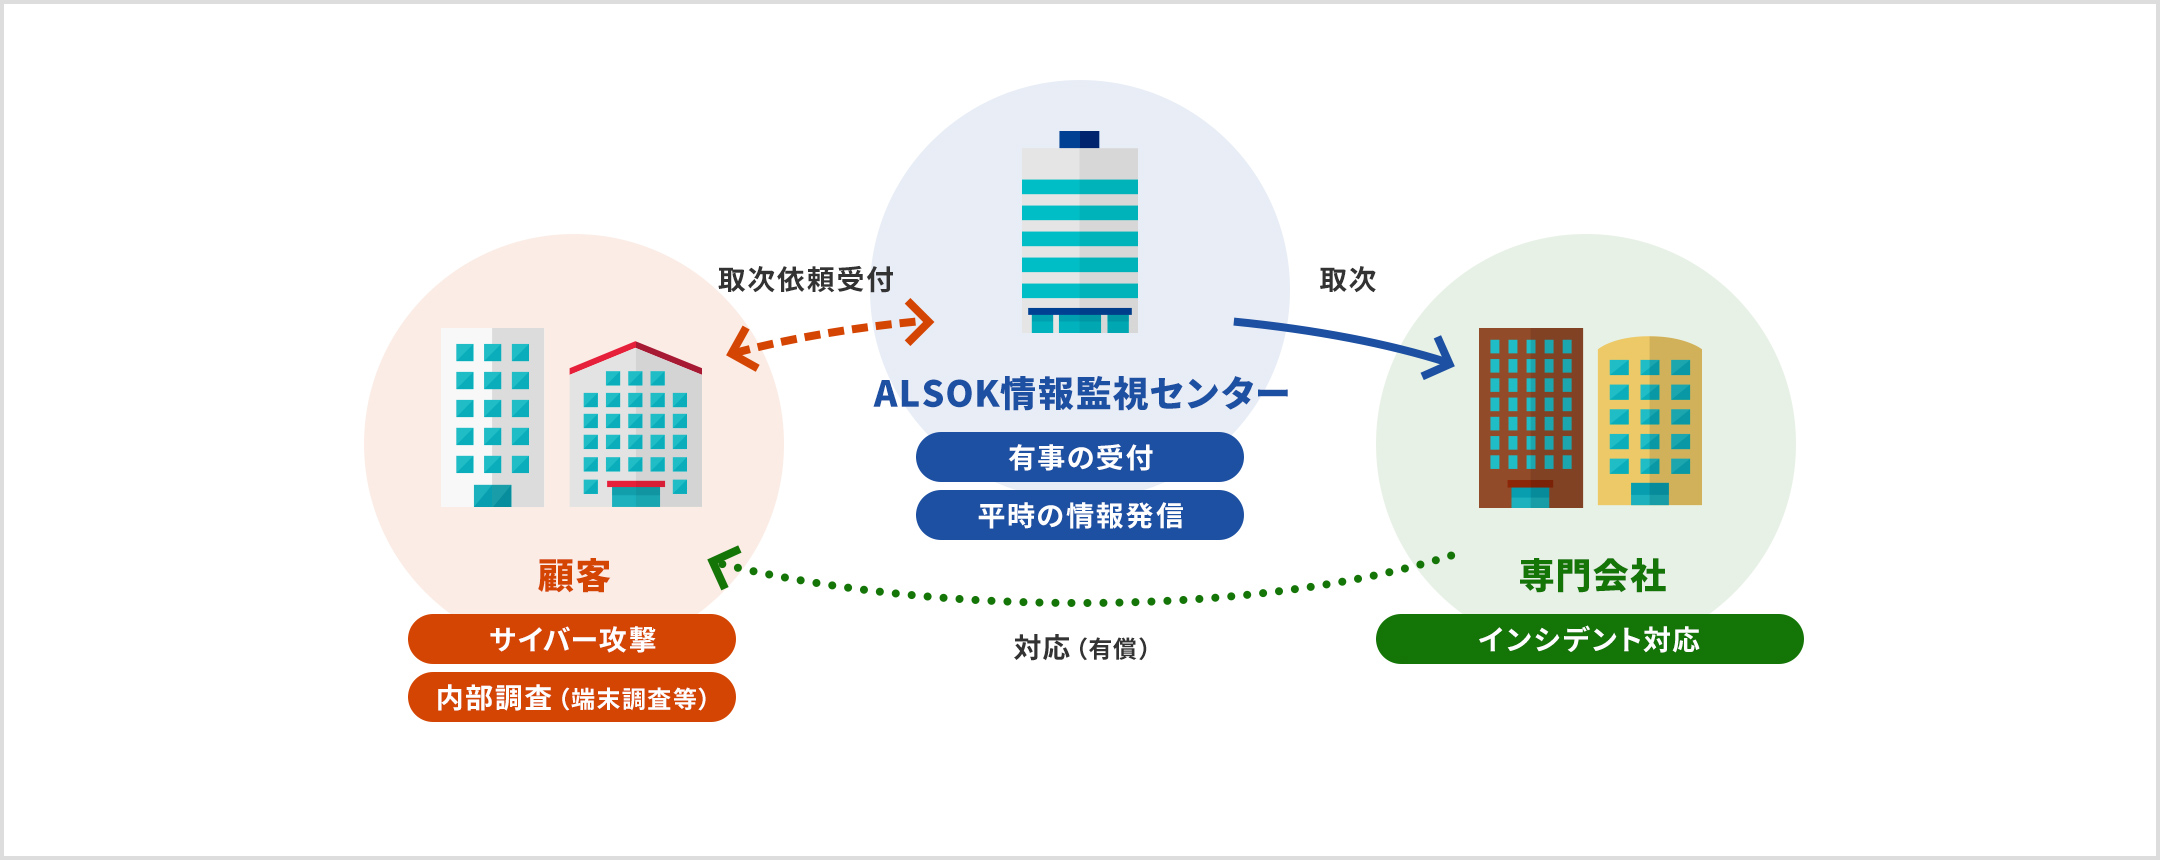 ALSOK情報監視センターは有事の受付、平時の情報発信を。顧客のサイバー攻撃や内部調査（端末調査等）がある場合、ALSOKから専門会社に取次、インシデント対応（有償）を行います。